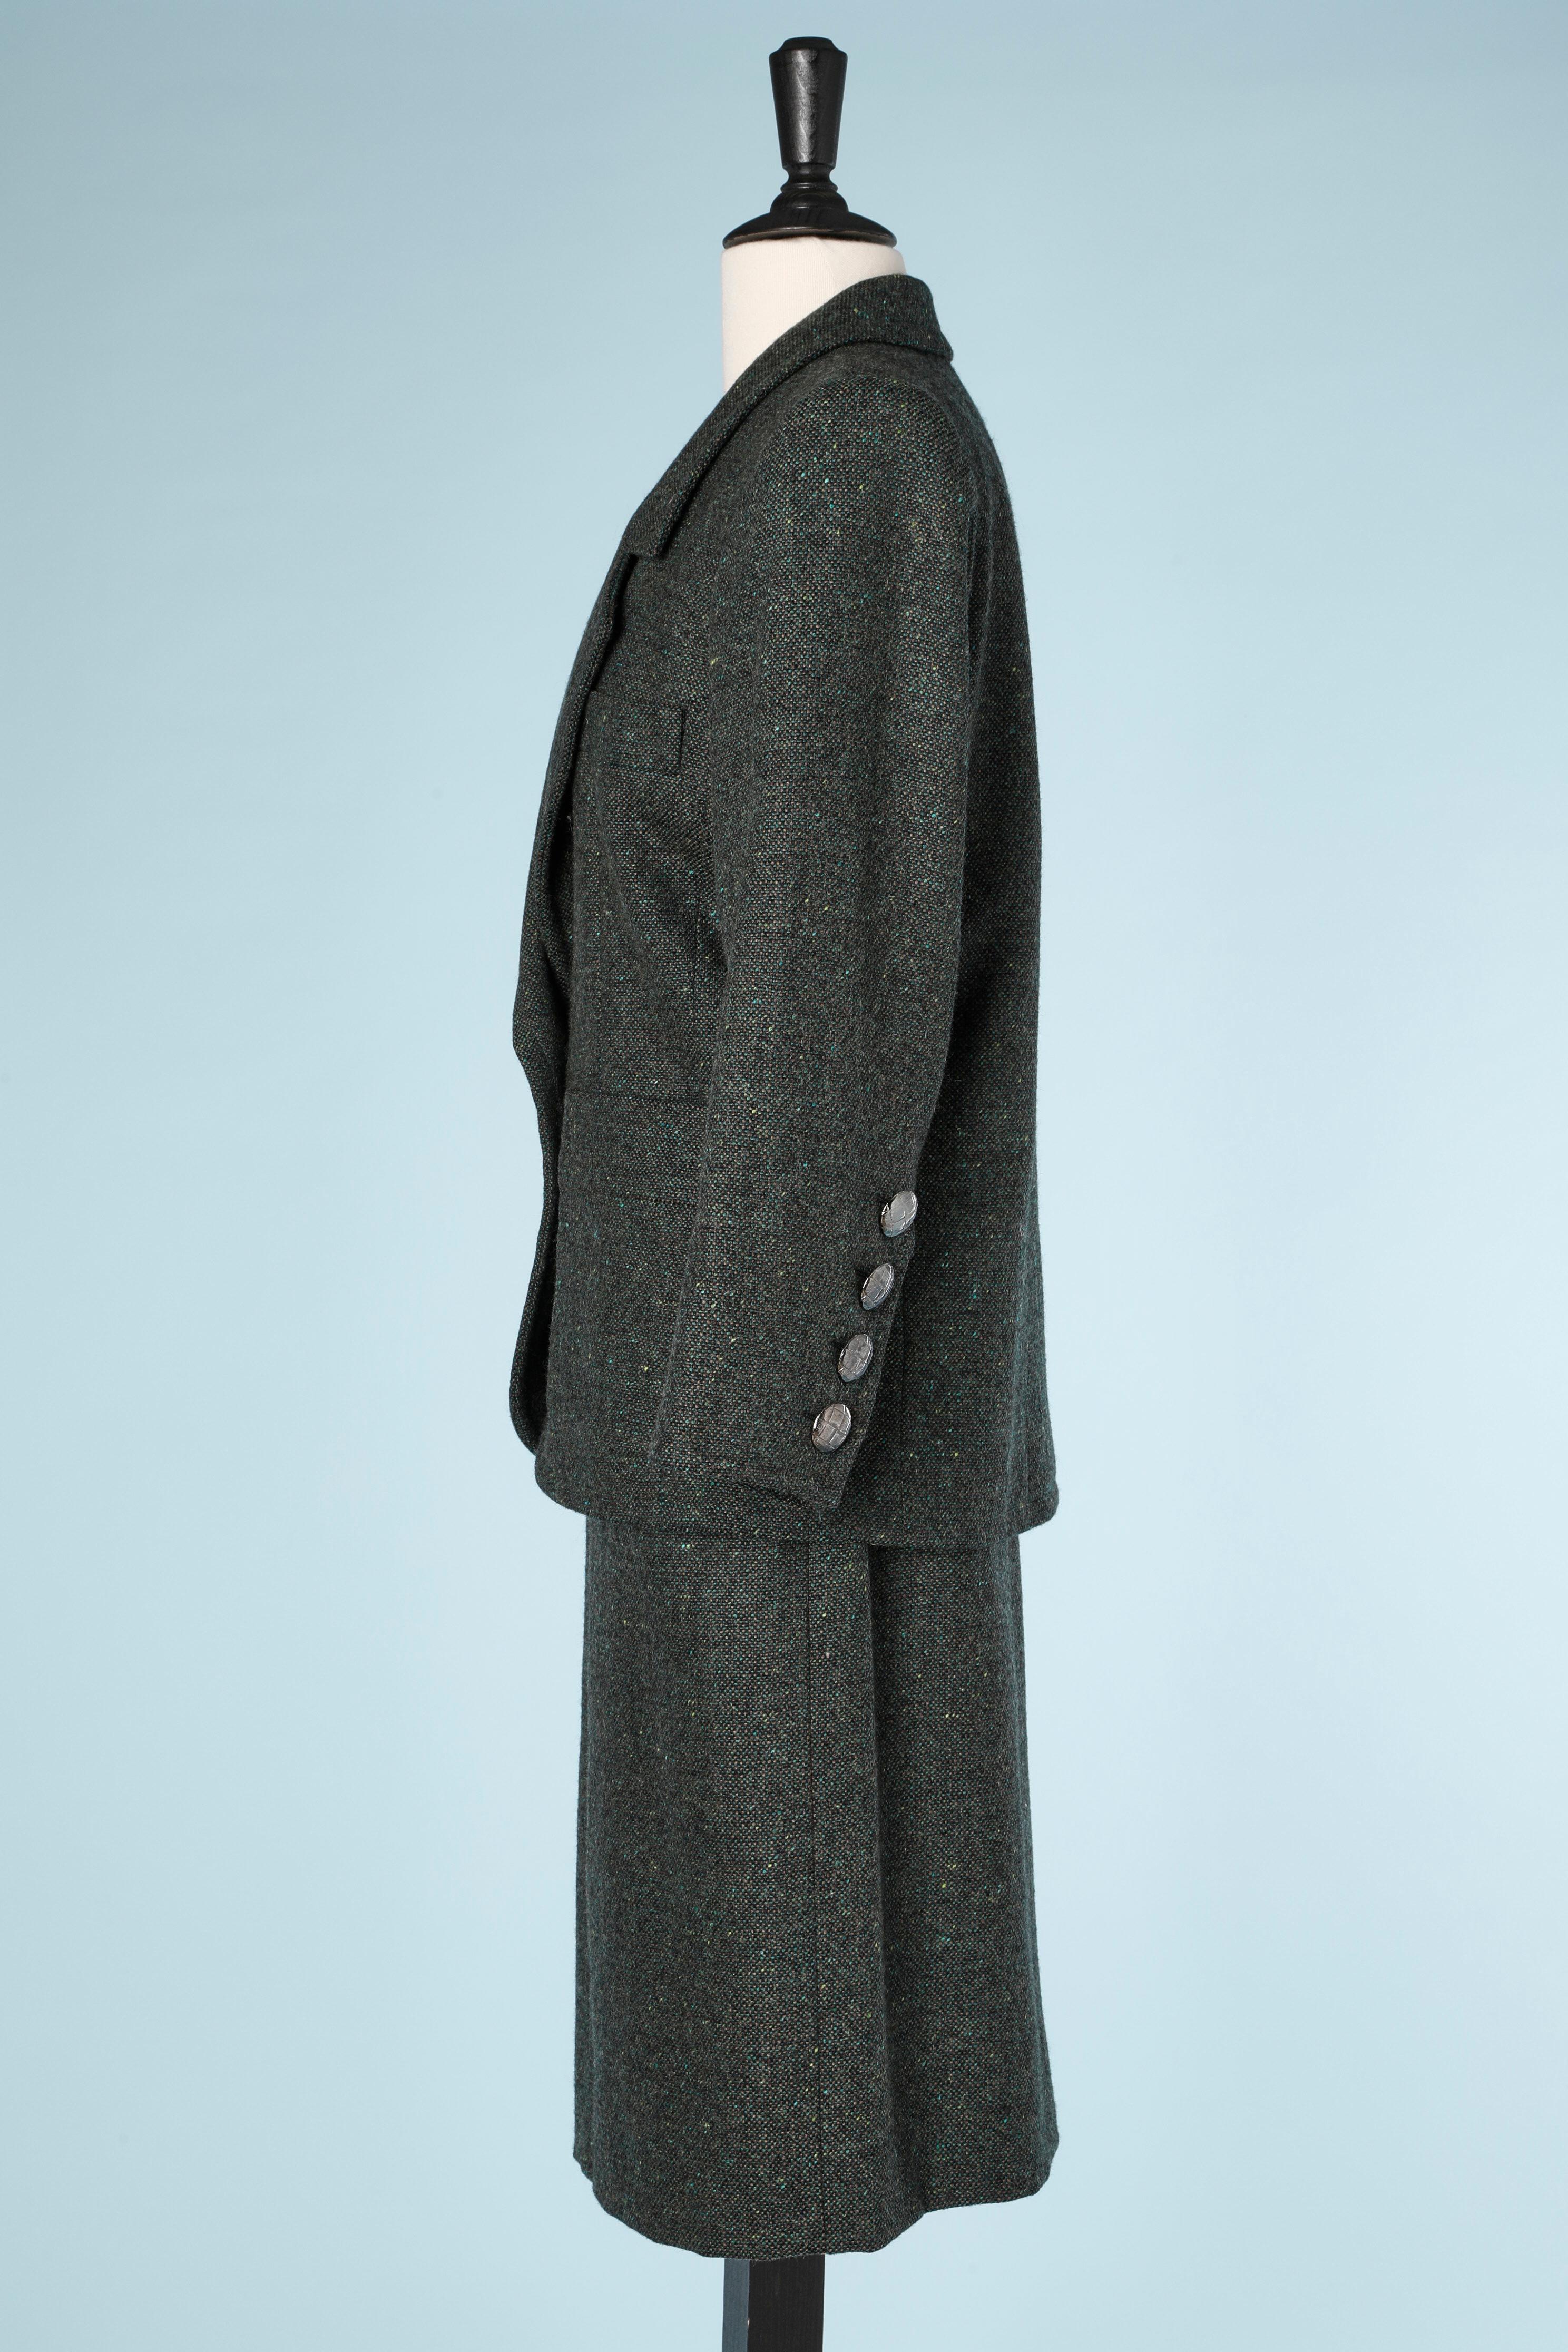 Dark green wool tweed skirt-suit Yves Saint Laurent Rive Gauche Circa 1980's  For Sale 2